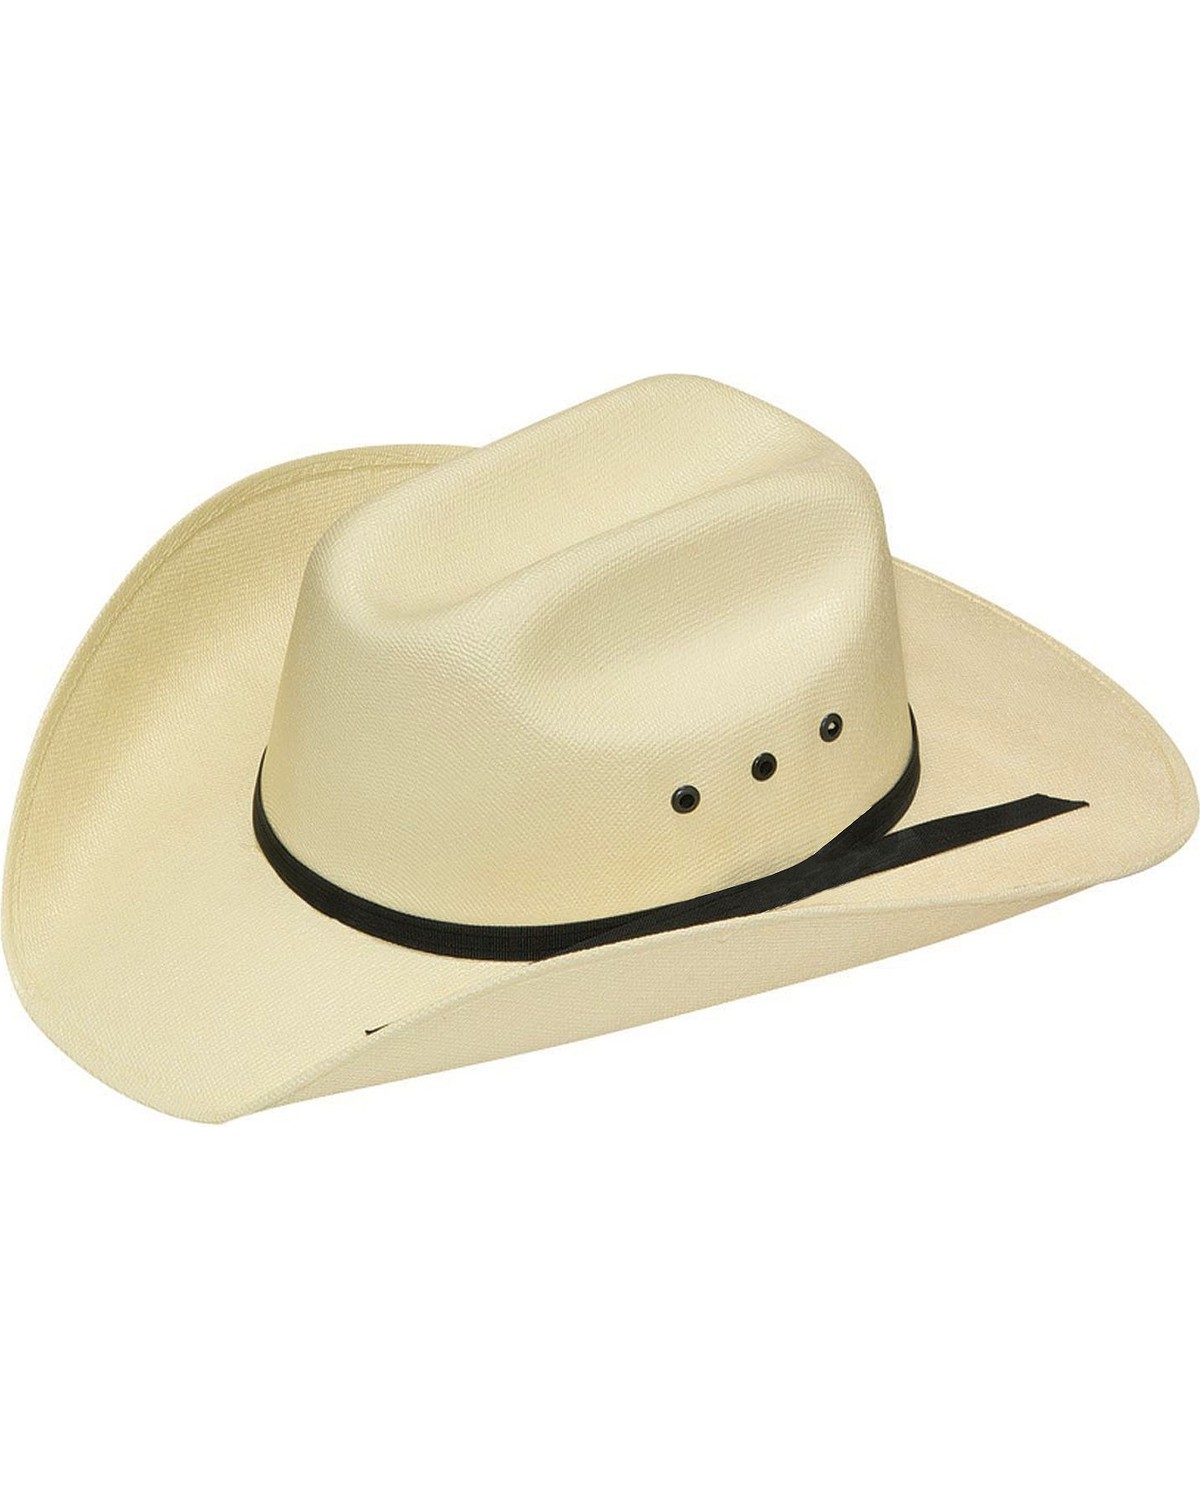 Twister Kids' Sancho Straw Cowboy Hat